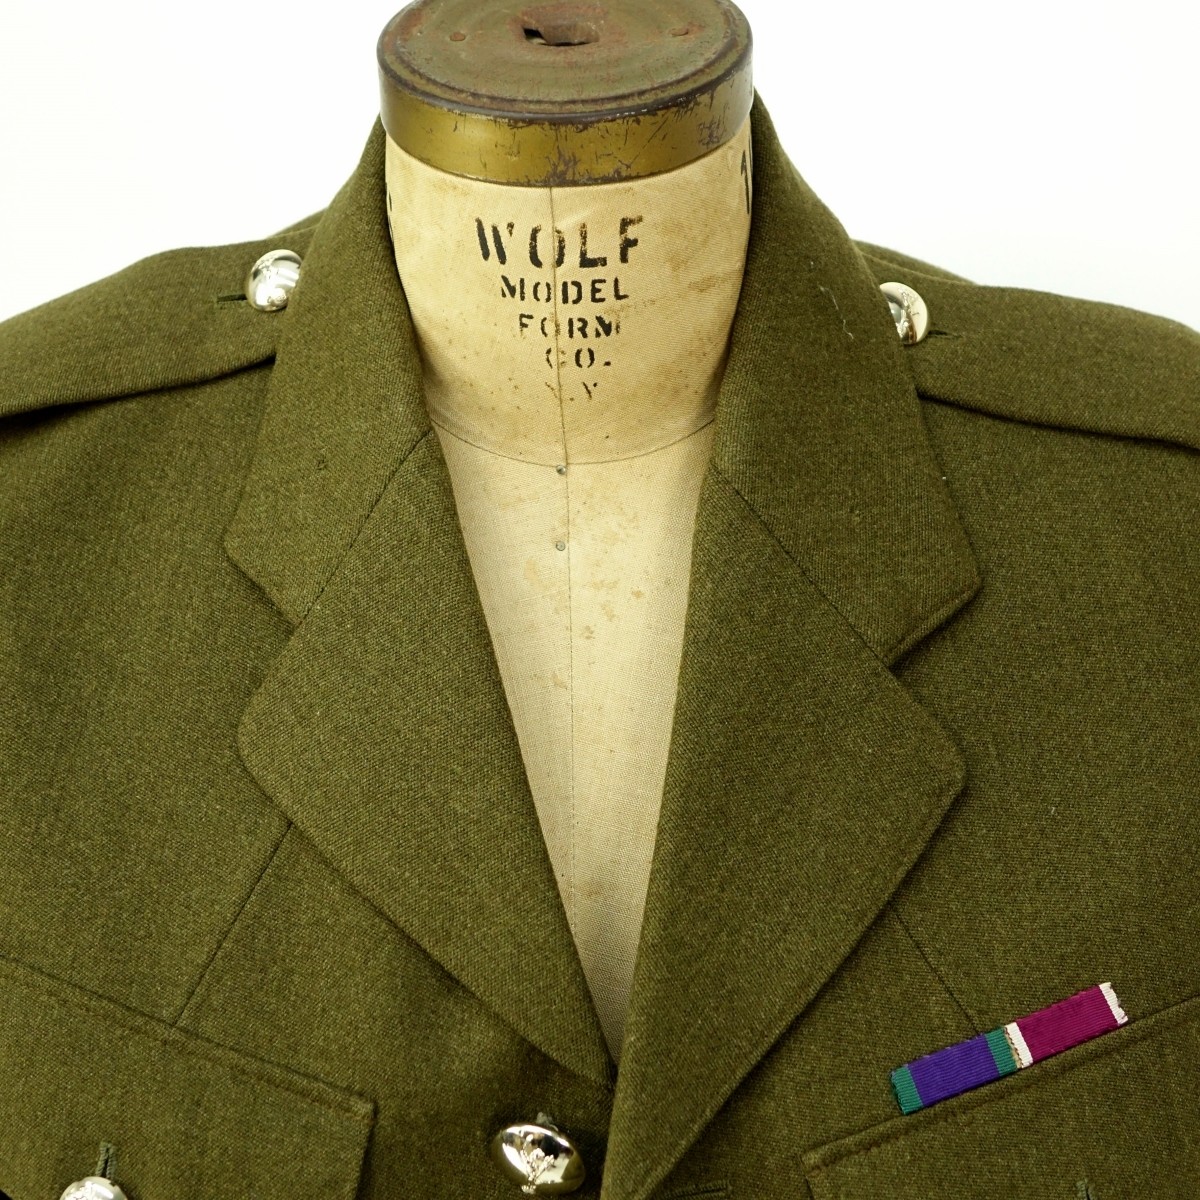 Vintage British Army Green Military Coat.